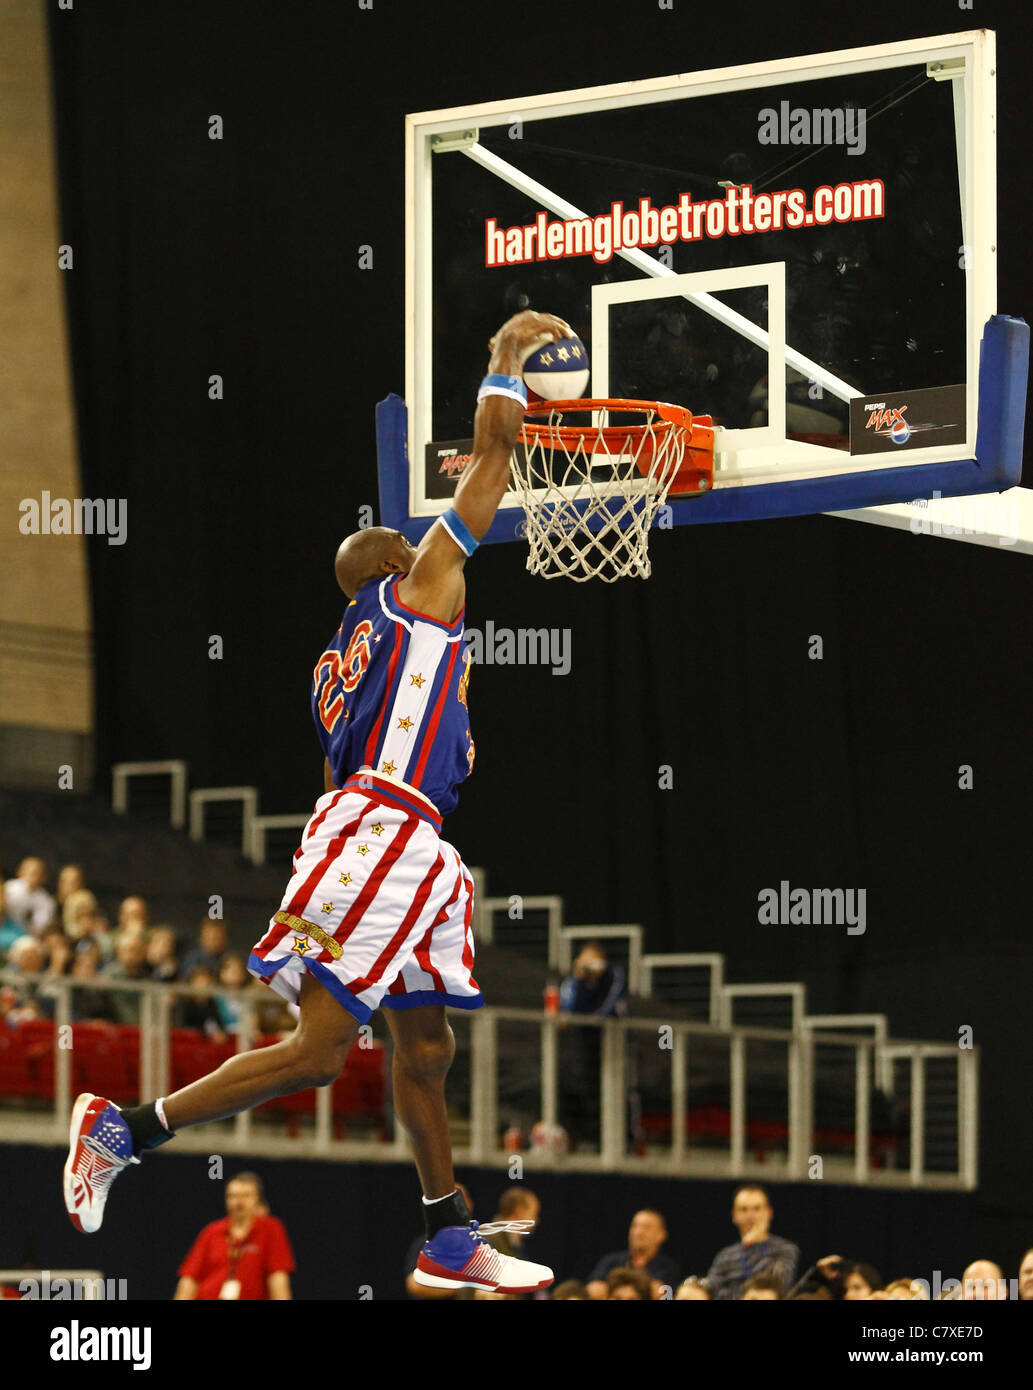 Le basket-ball sont de Harlem Globetrotters à Budapest, Hongrie Banque D'Images